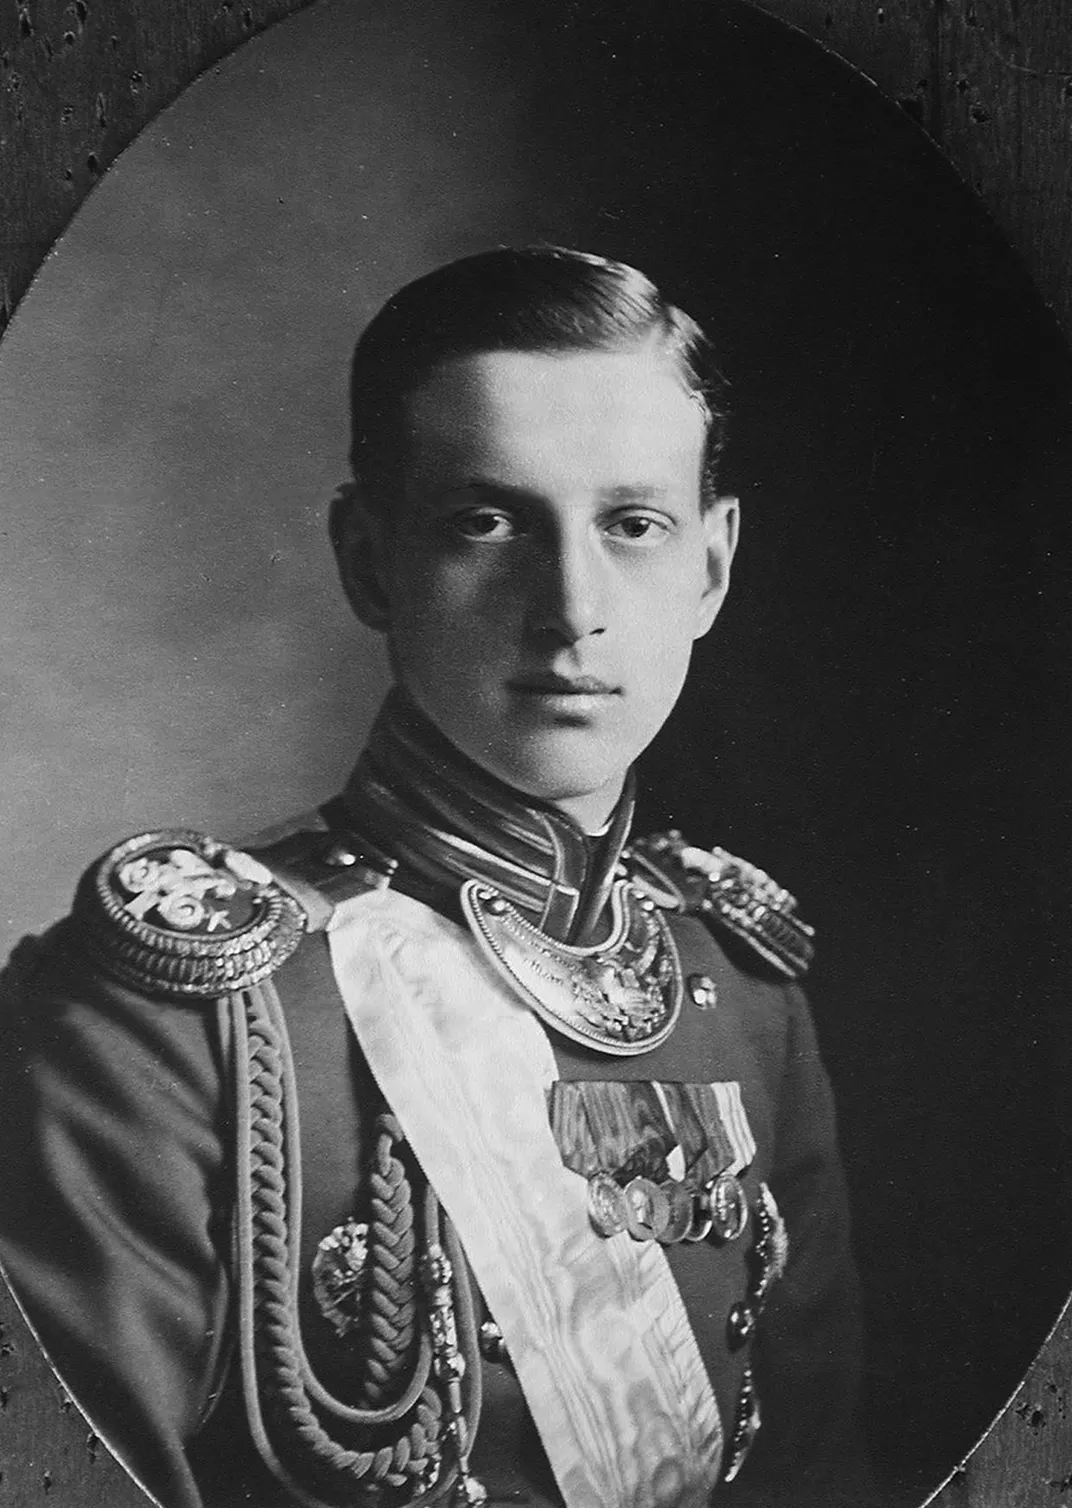 Grand Duke Dmitri Pavlovich, one of the conspirators in the plot to murder Rasputin